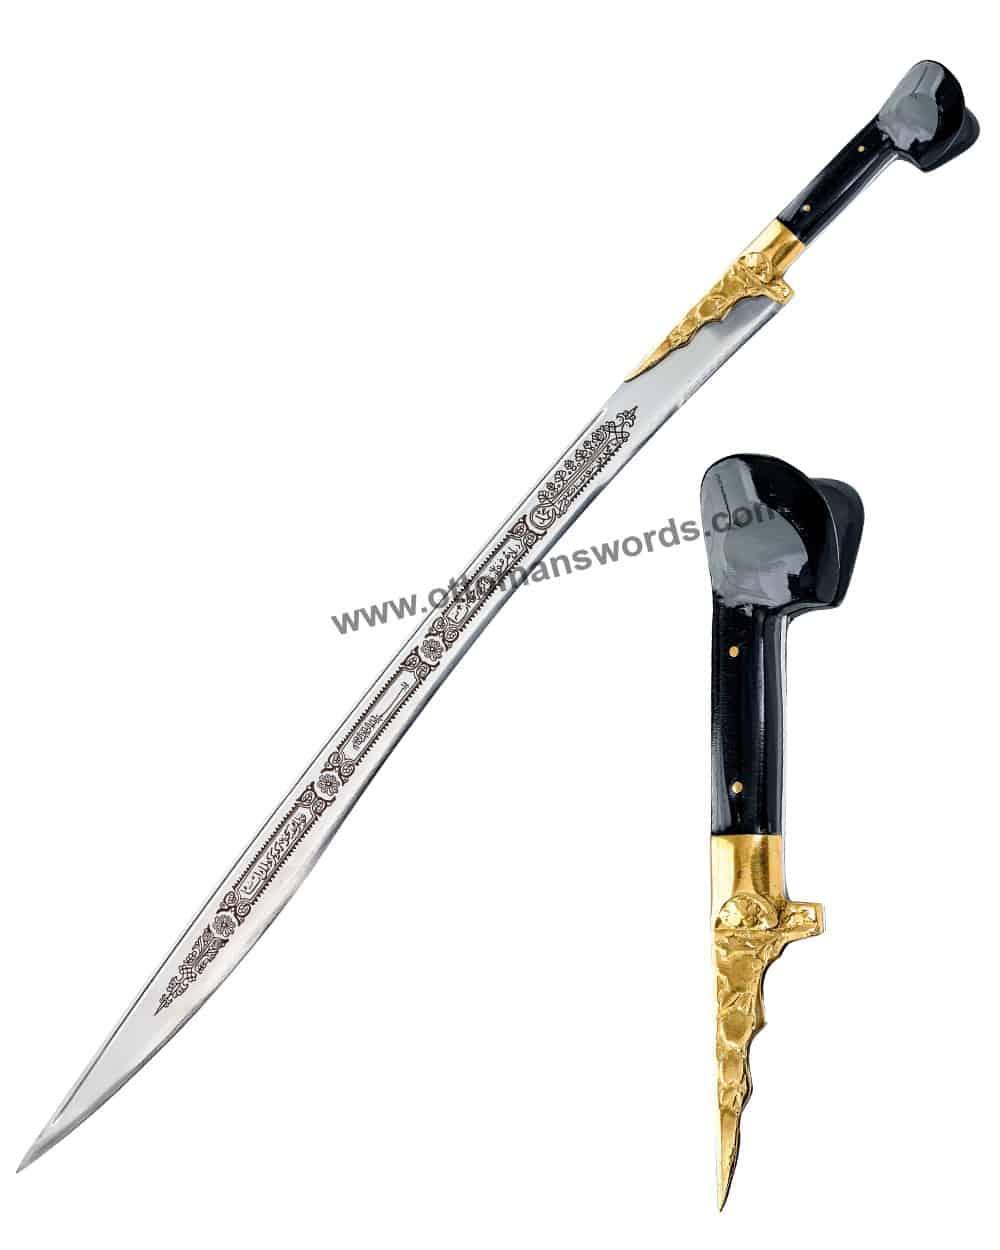 yatagan sword for sale 75 cm